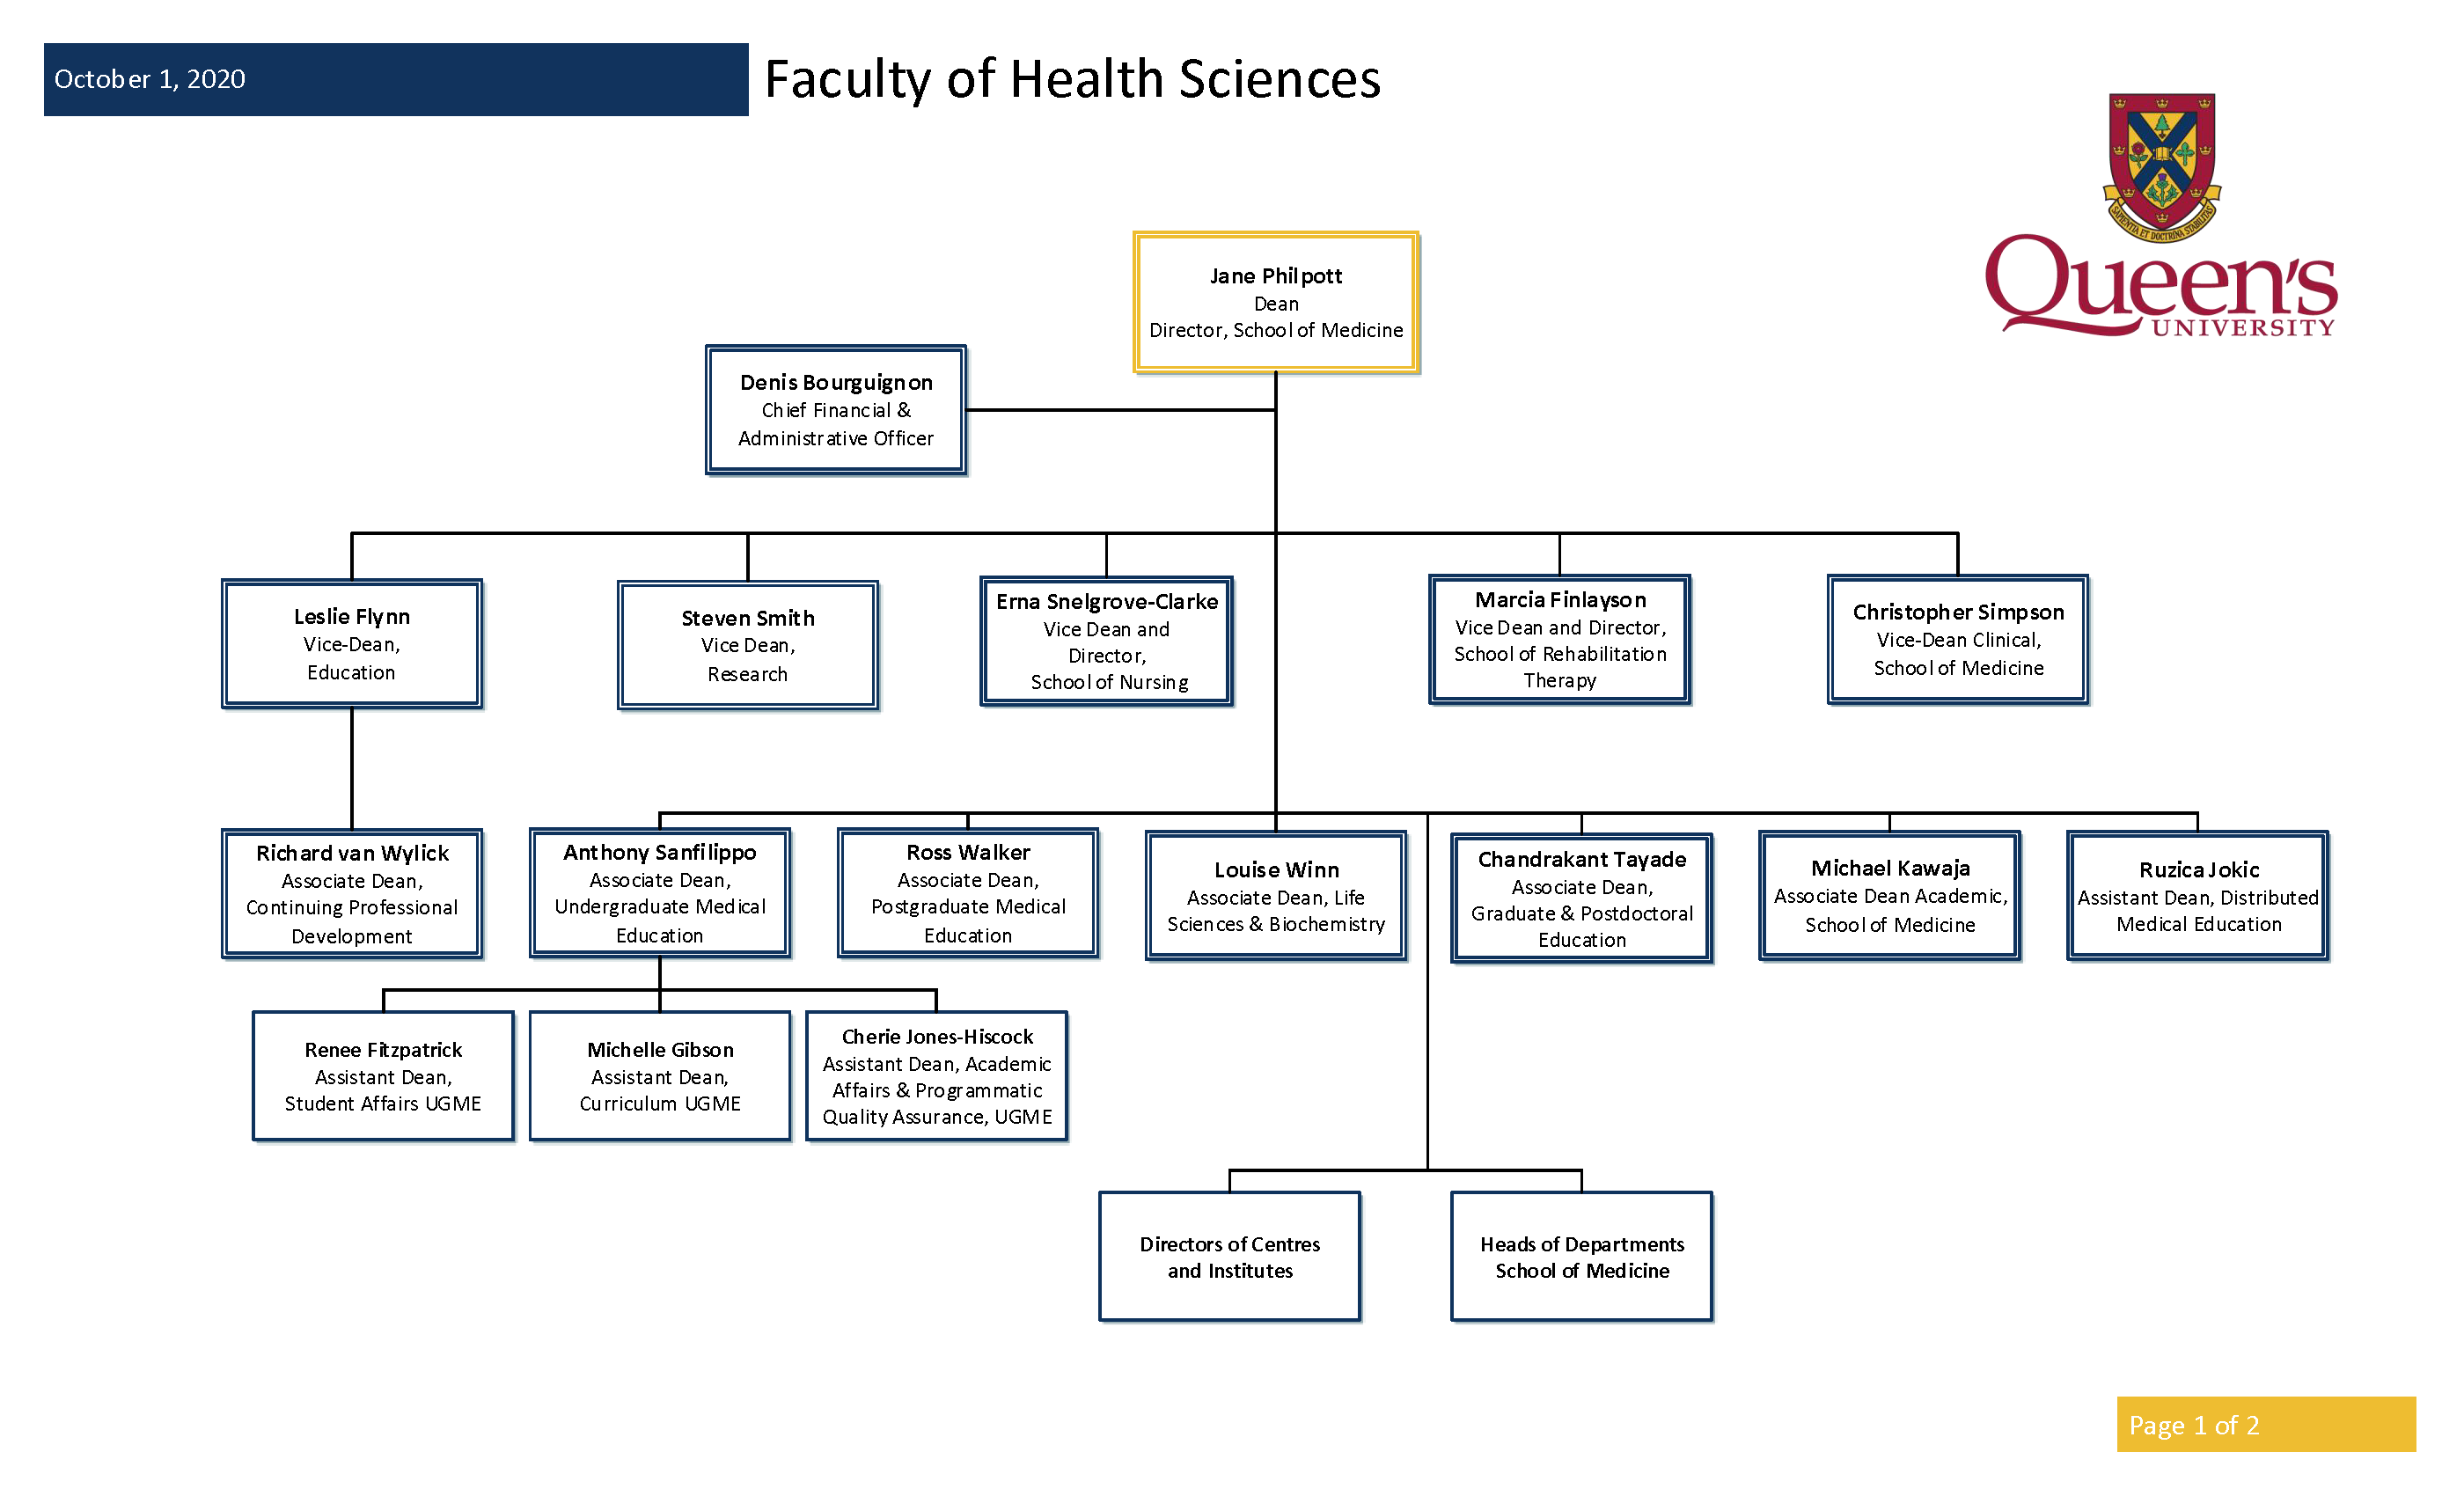 Faculty of Health Sciences - Executive Team